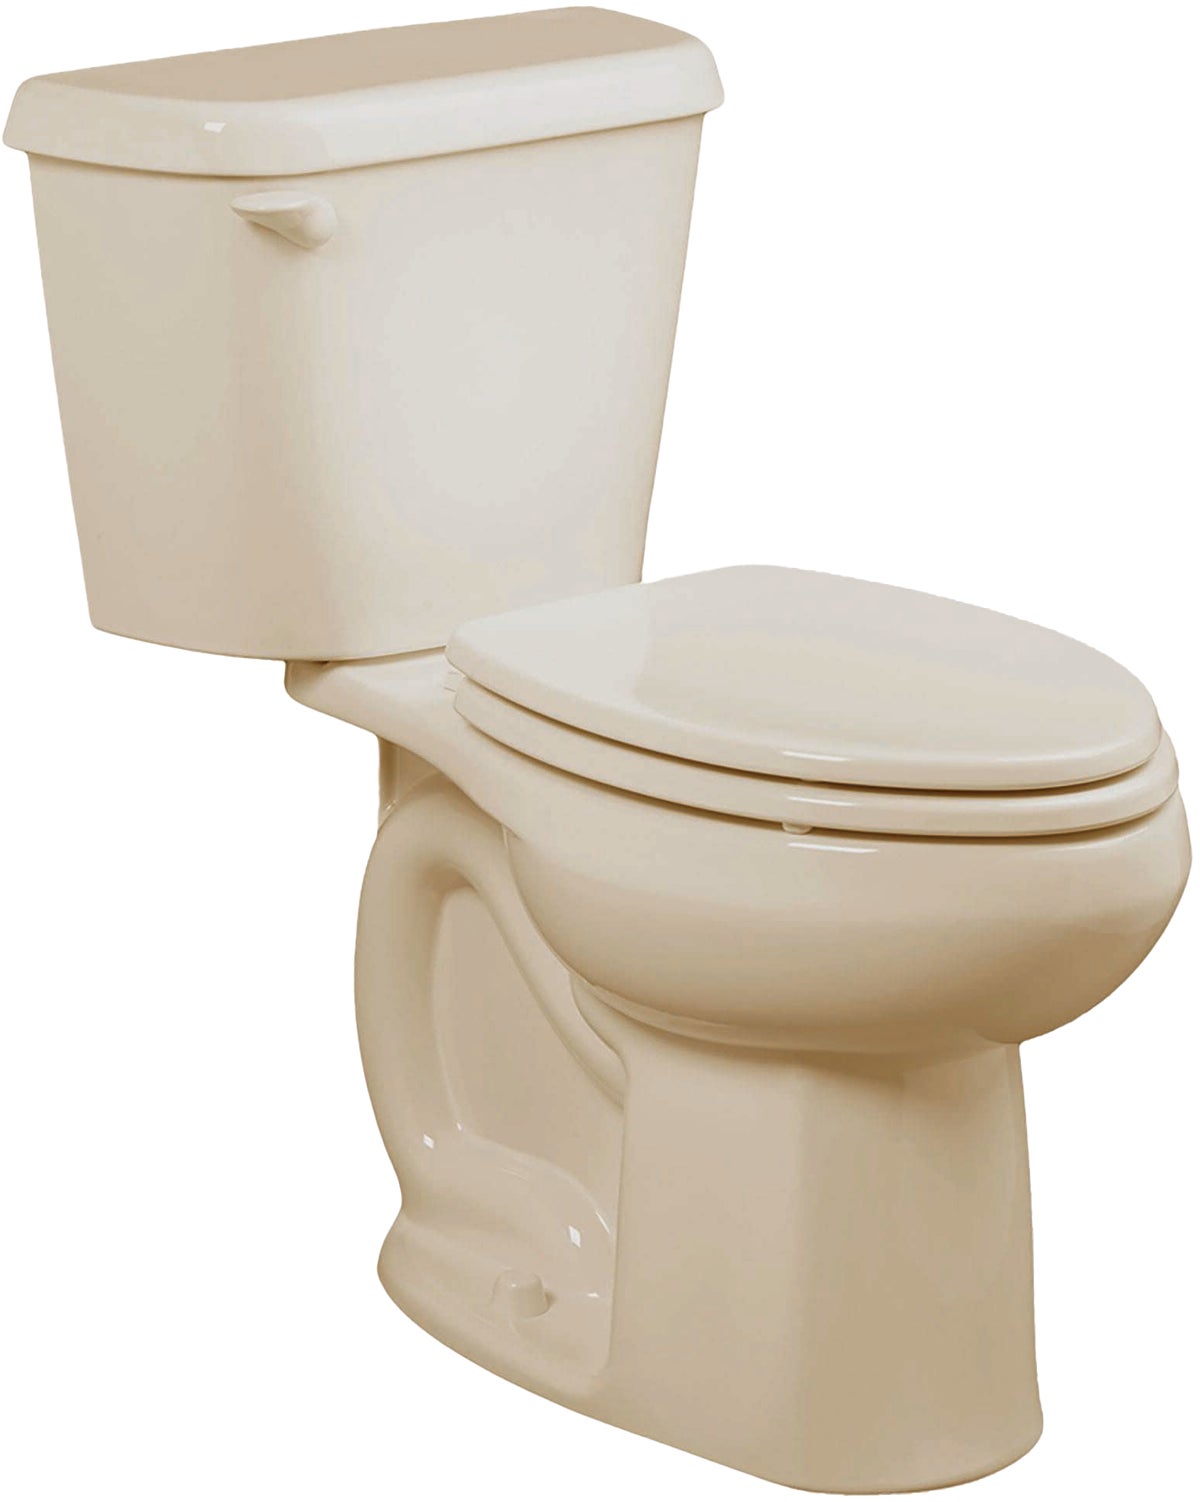 Buy American Standard Colony Ada Elongated Bowl Toilet To Go Bone